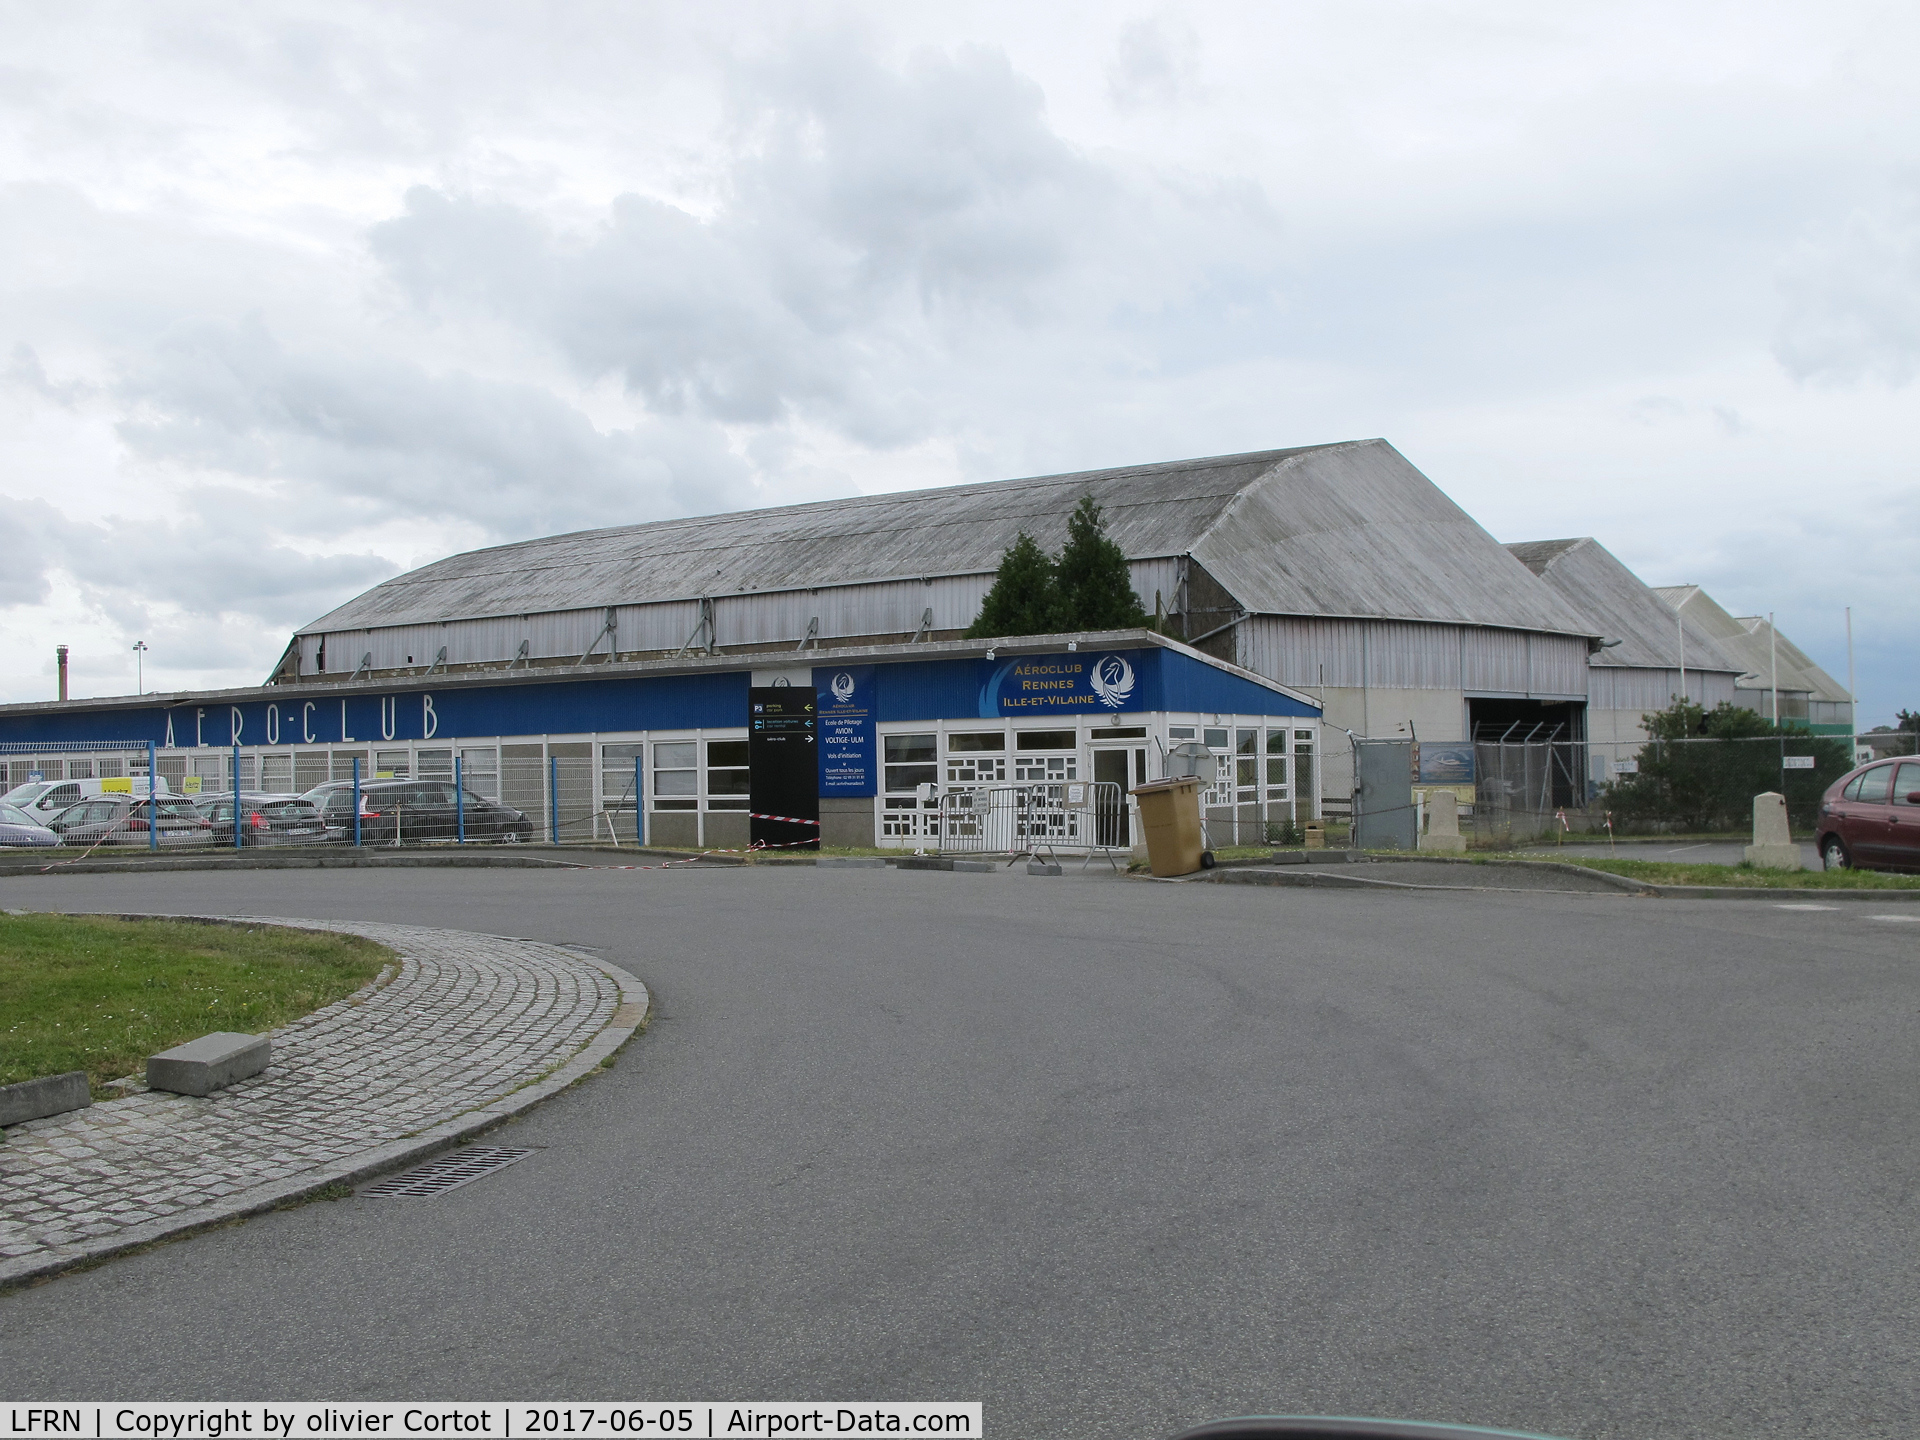 Rennes Airport, Saint-Jacques Airport France (LFRN) - the aeroclub hangars